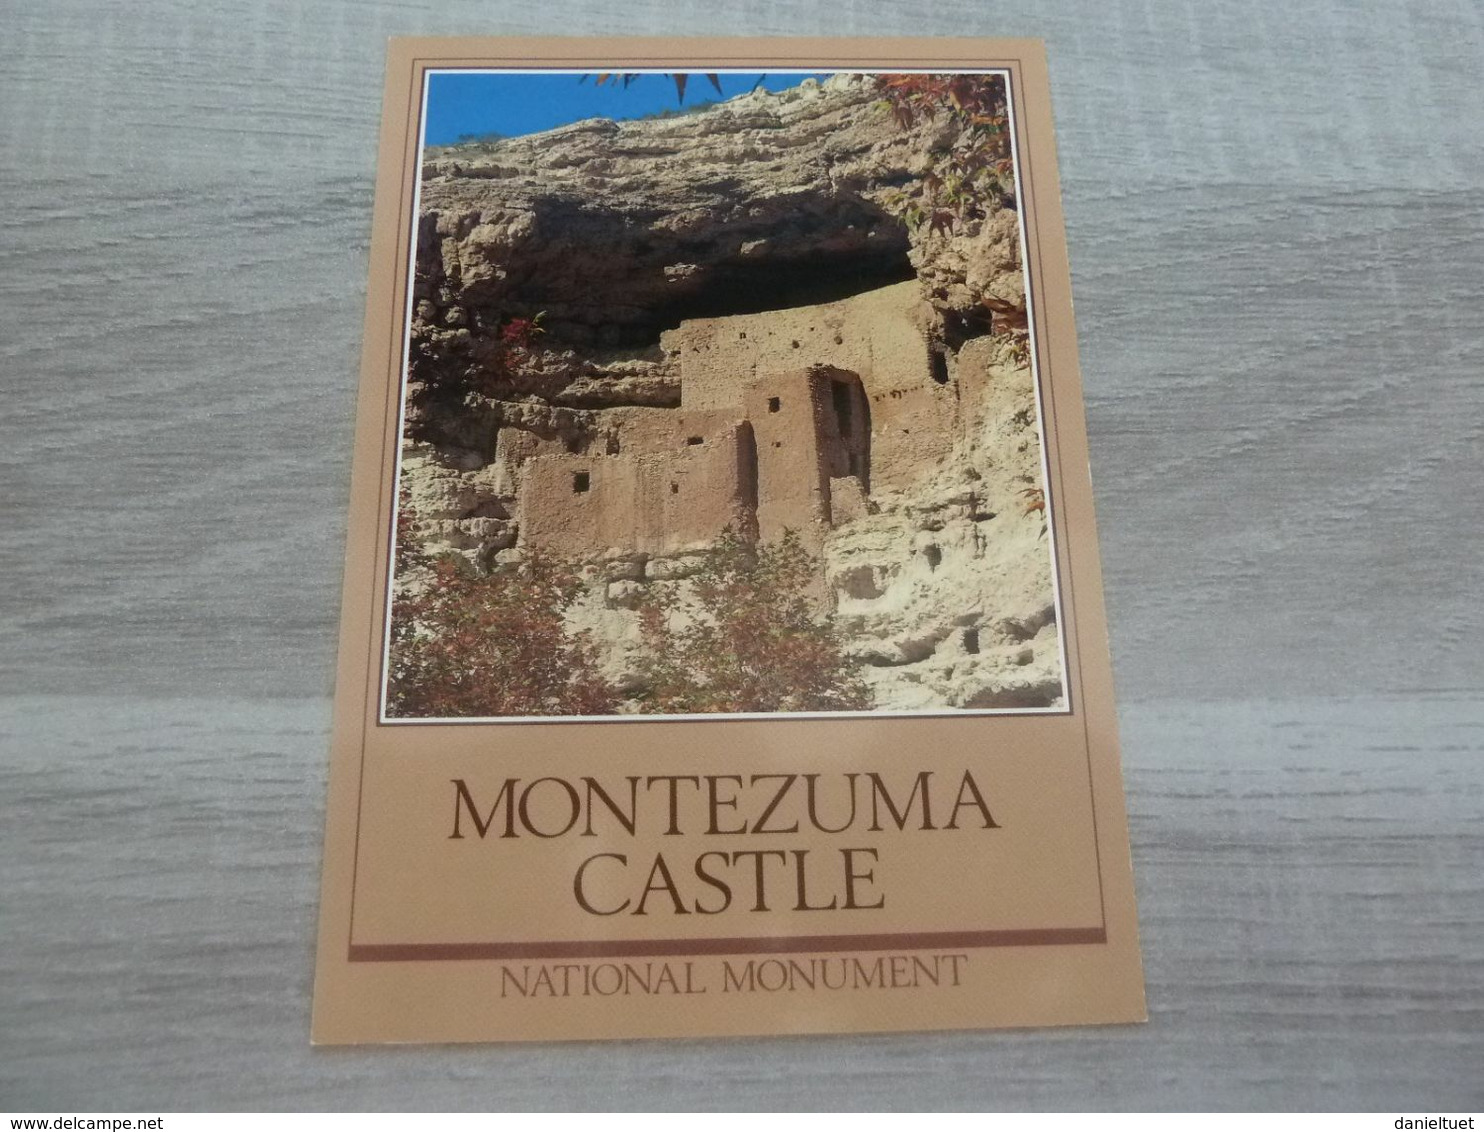 Montezuma Castle - National Monument - 2082-B - Editions Area - - Antelope Canyon